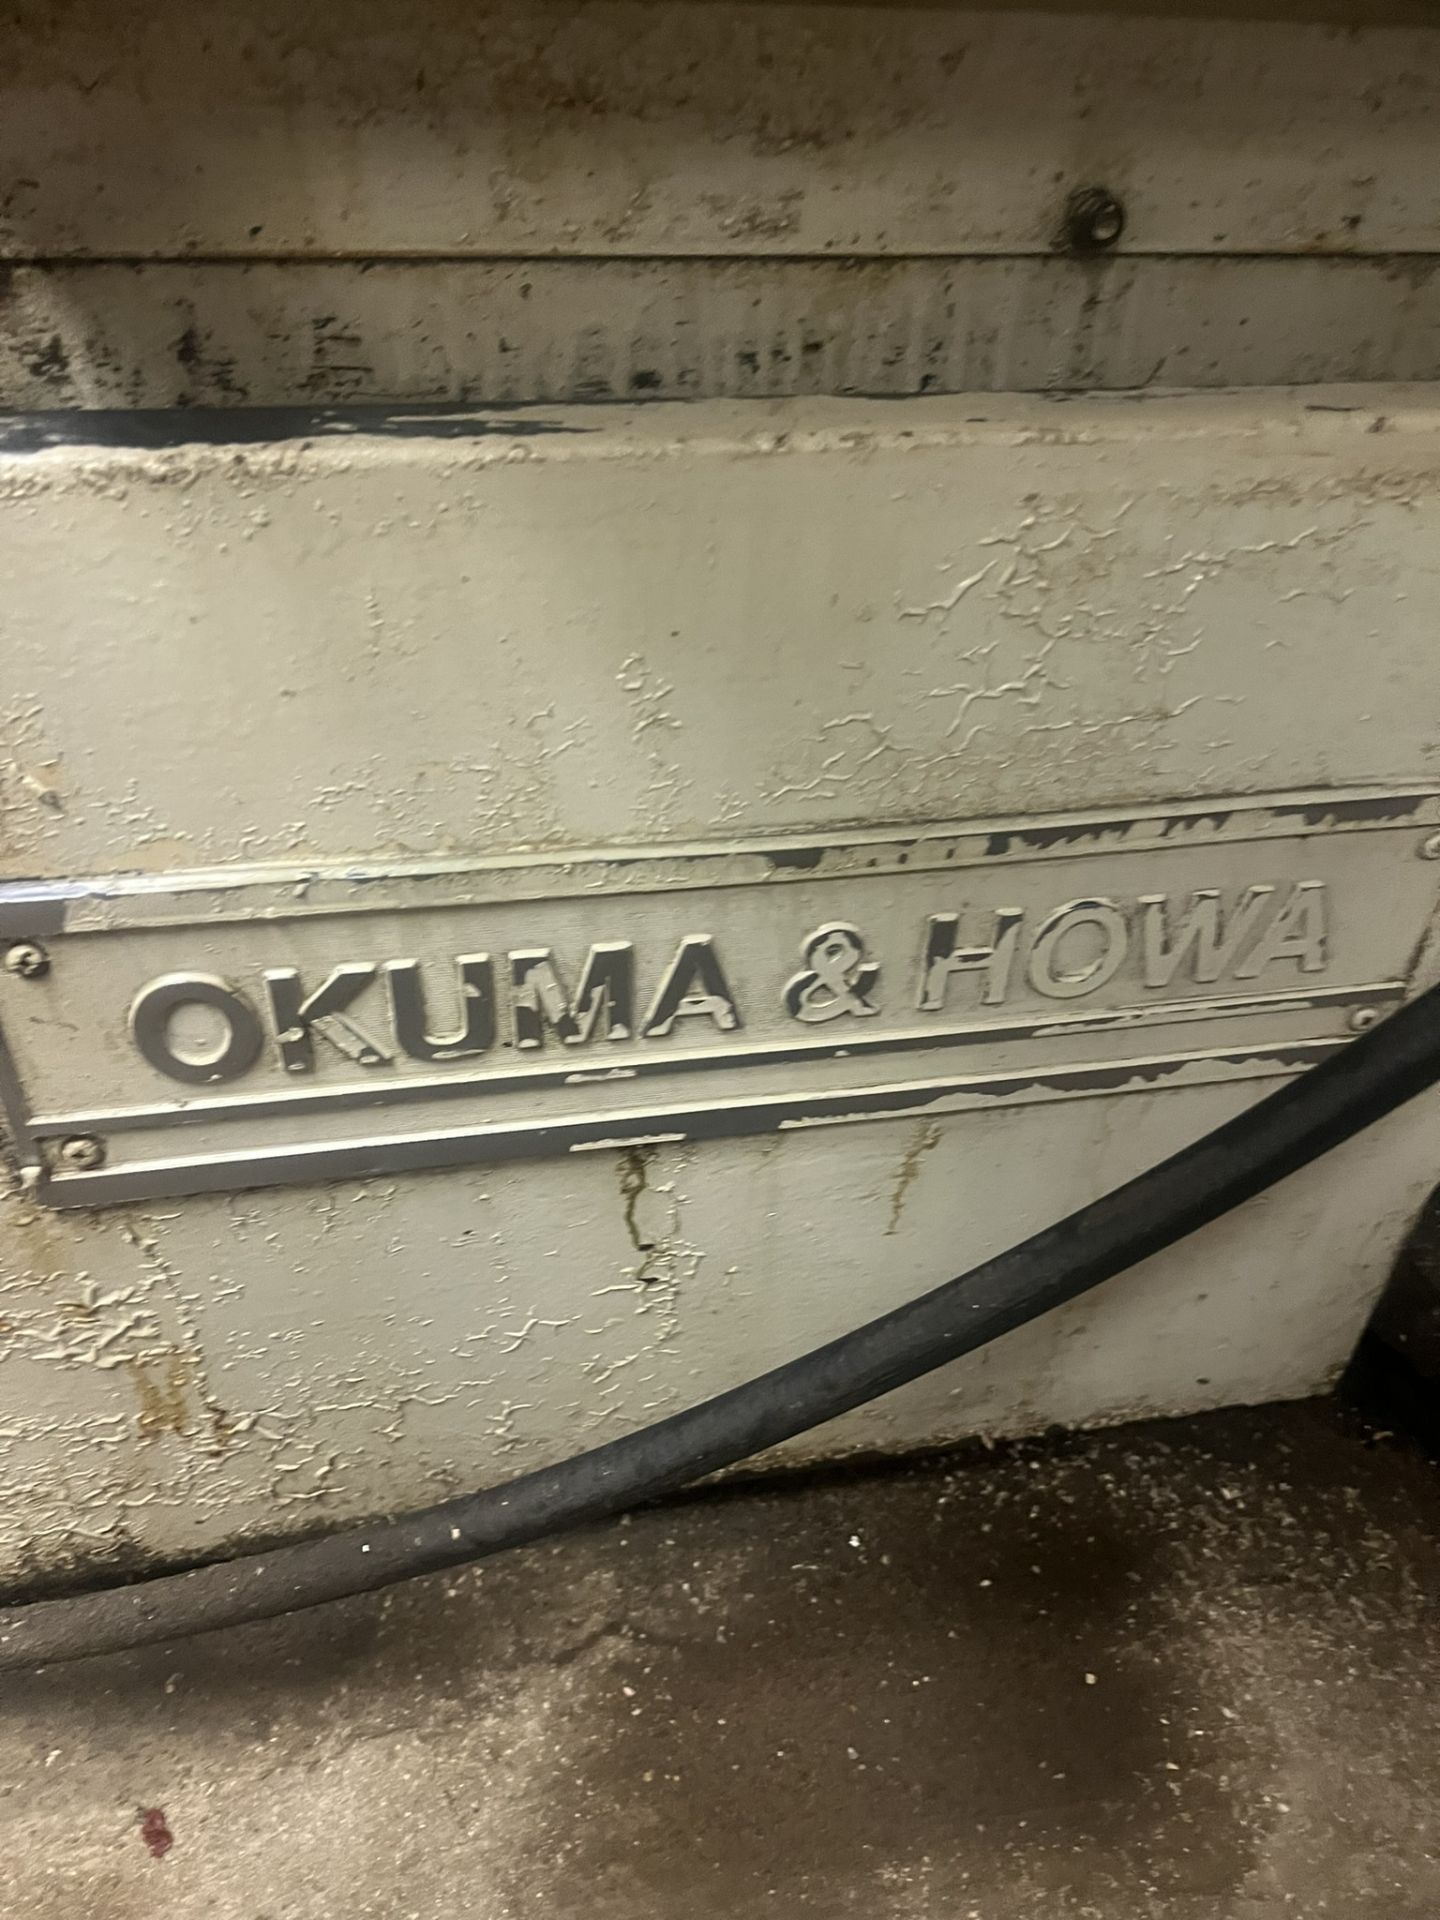 Okuma & Howa ACT-2SP-3T Model 25P-3, Serial #08110 with Enomoto Chip Conveyor, Powers On - Image 4 of 10